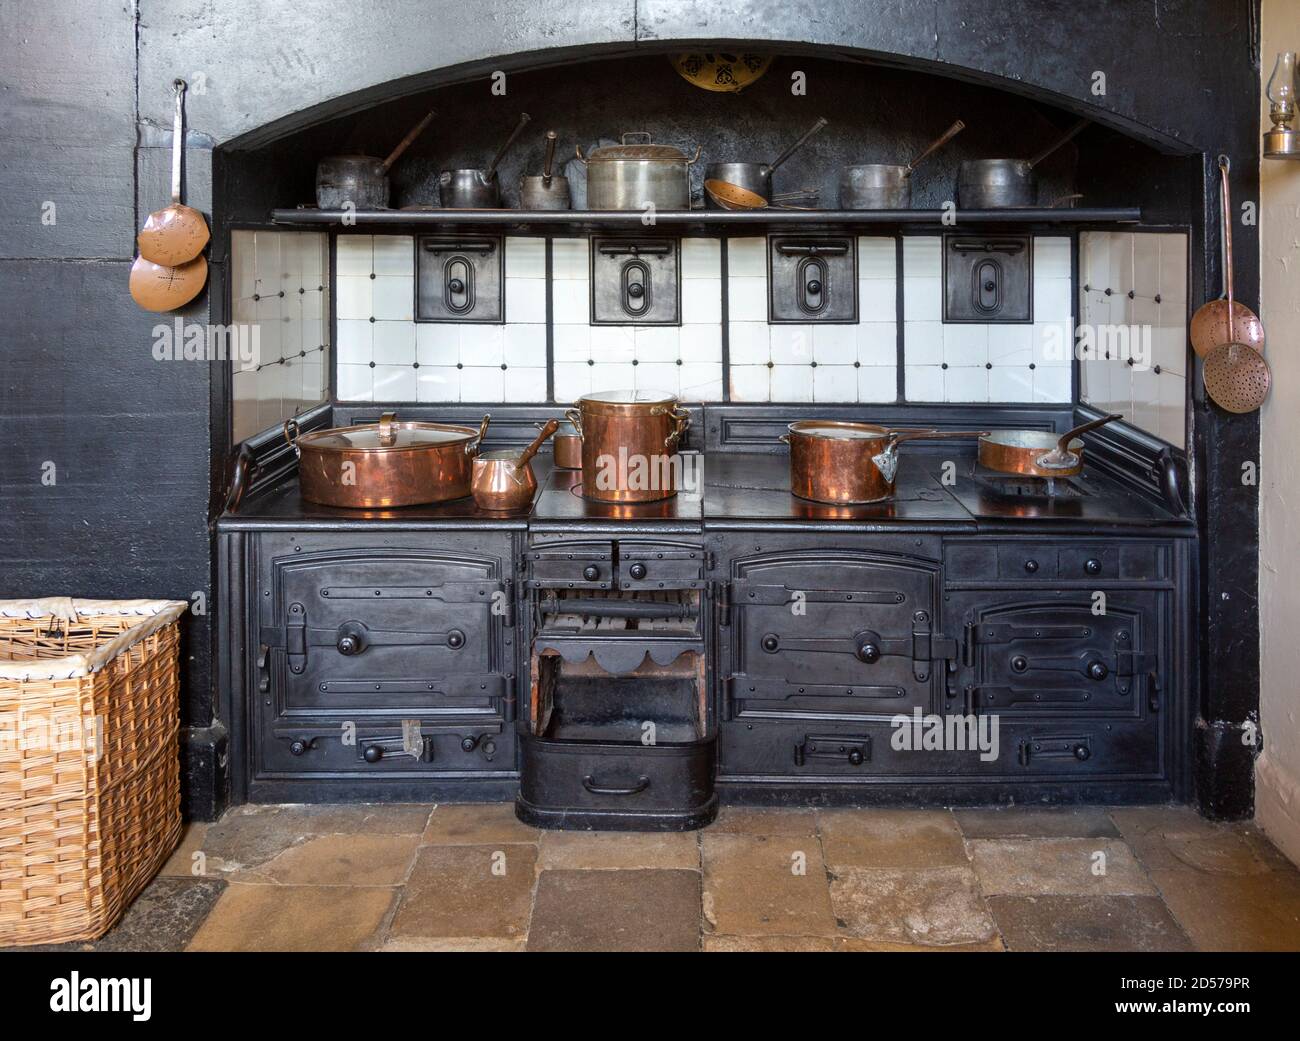 Cooking range inside the Victorian kitchen at Audley End House, Saffron Walden, Essex, England, UK Stock Photo